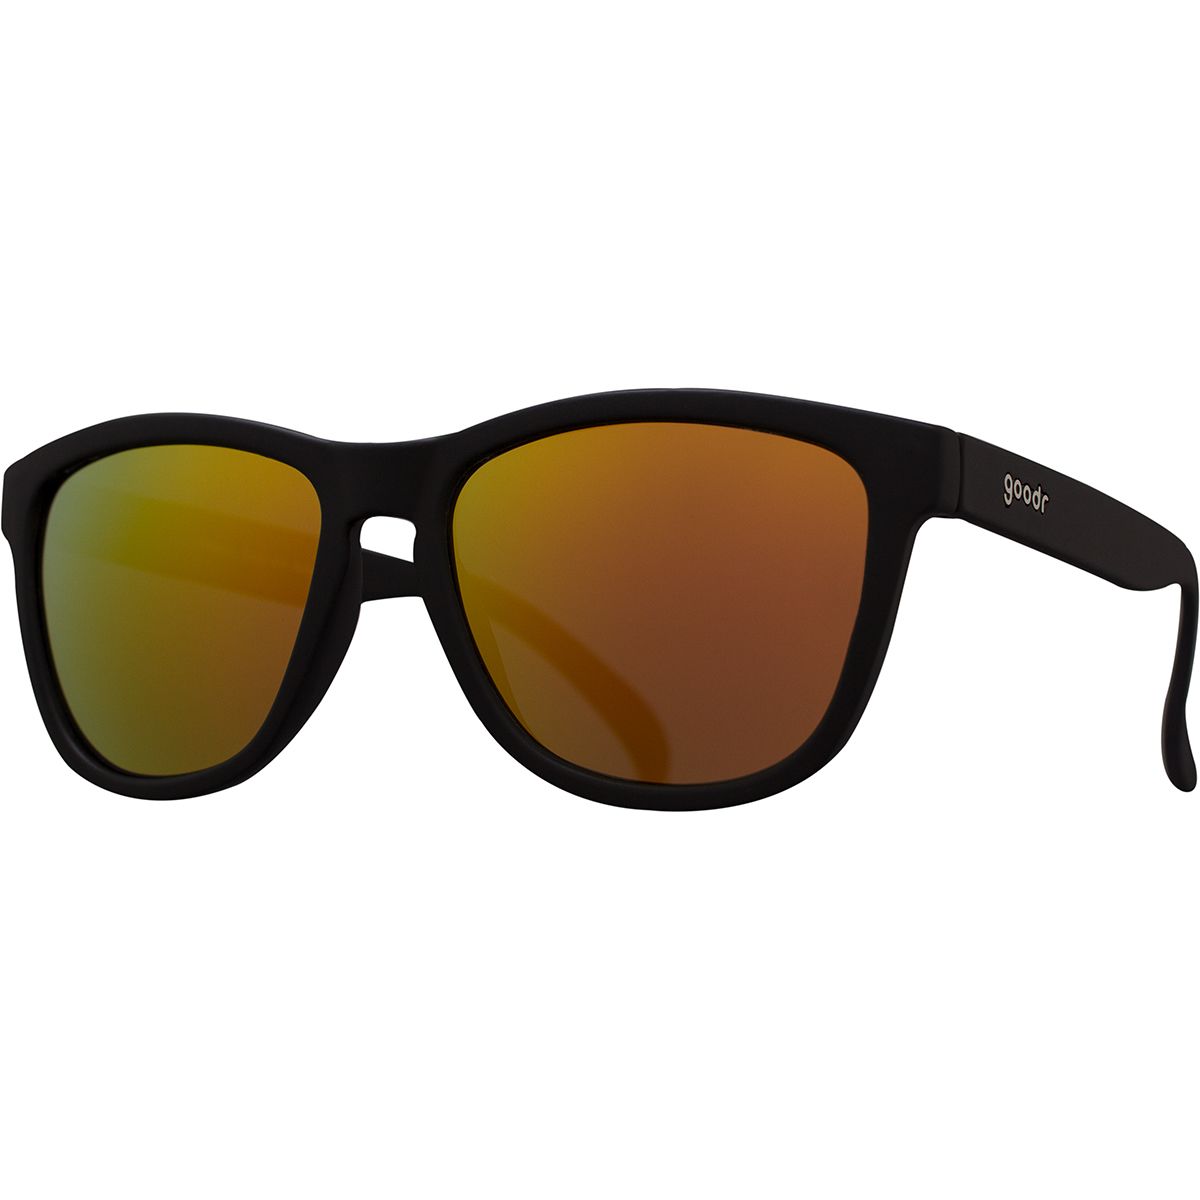 Goodr OG Polarized Sunglasses - Accessories | Backcountry